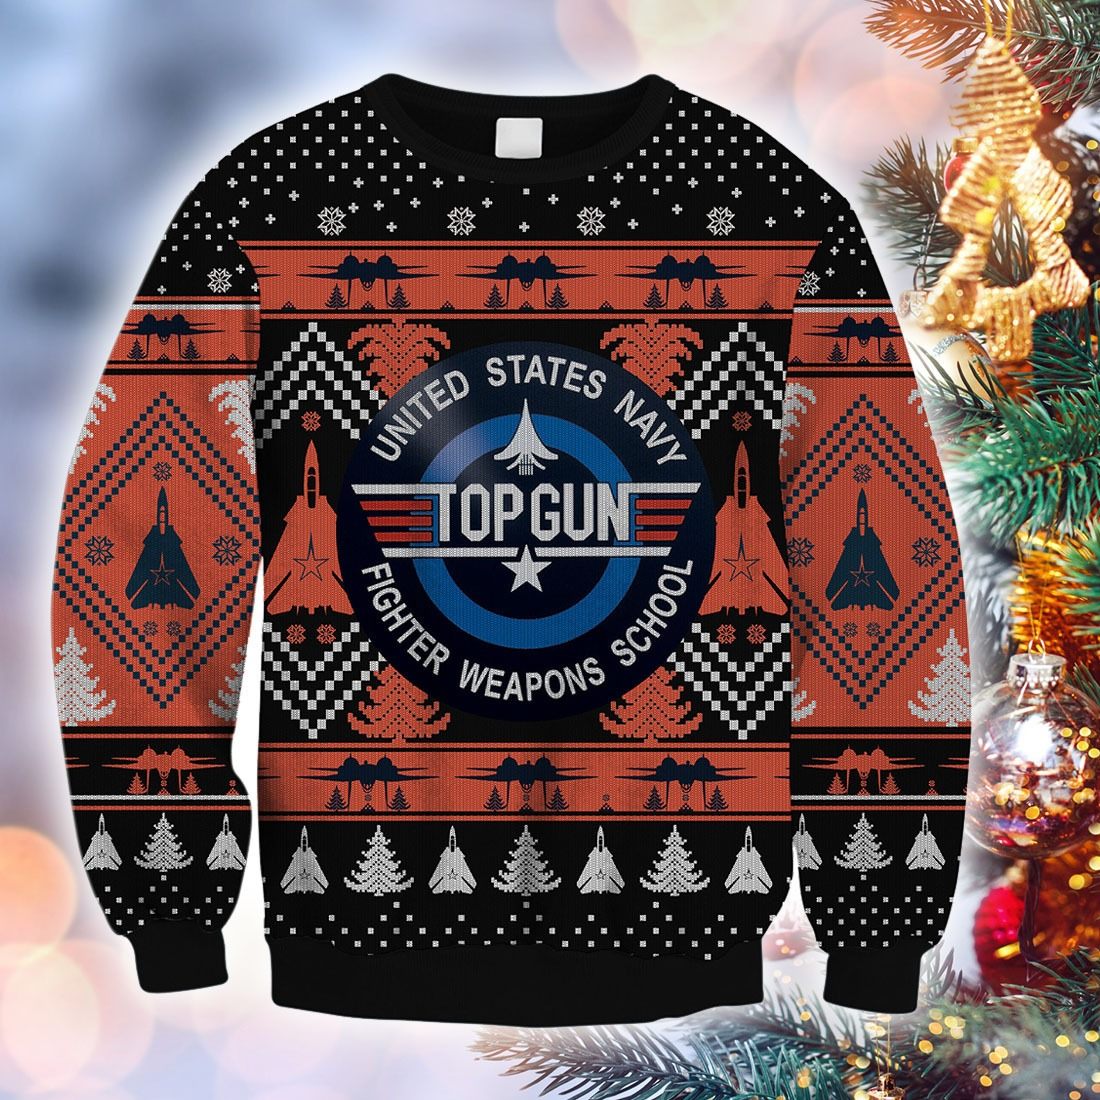 United States Navy Top Gun Fighter Weapons School Sweater Sweatshirt